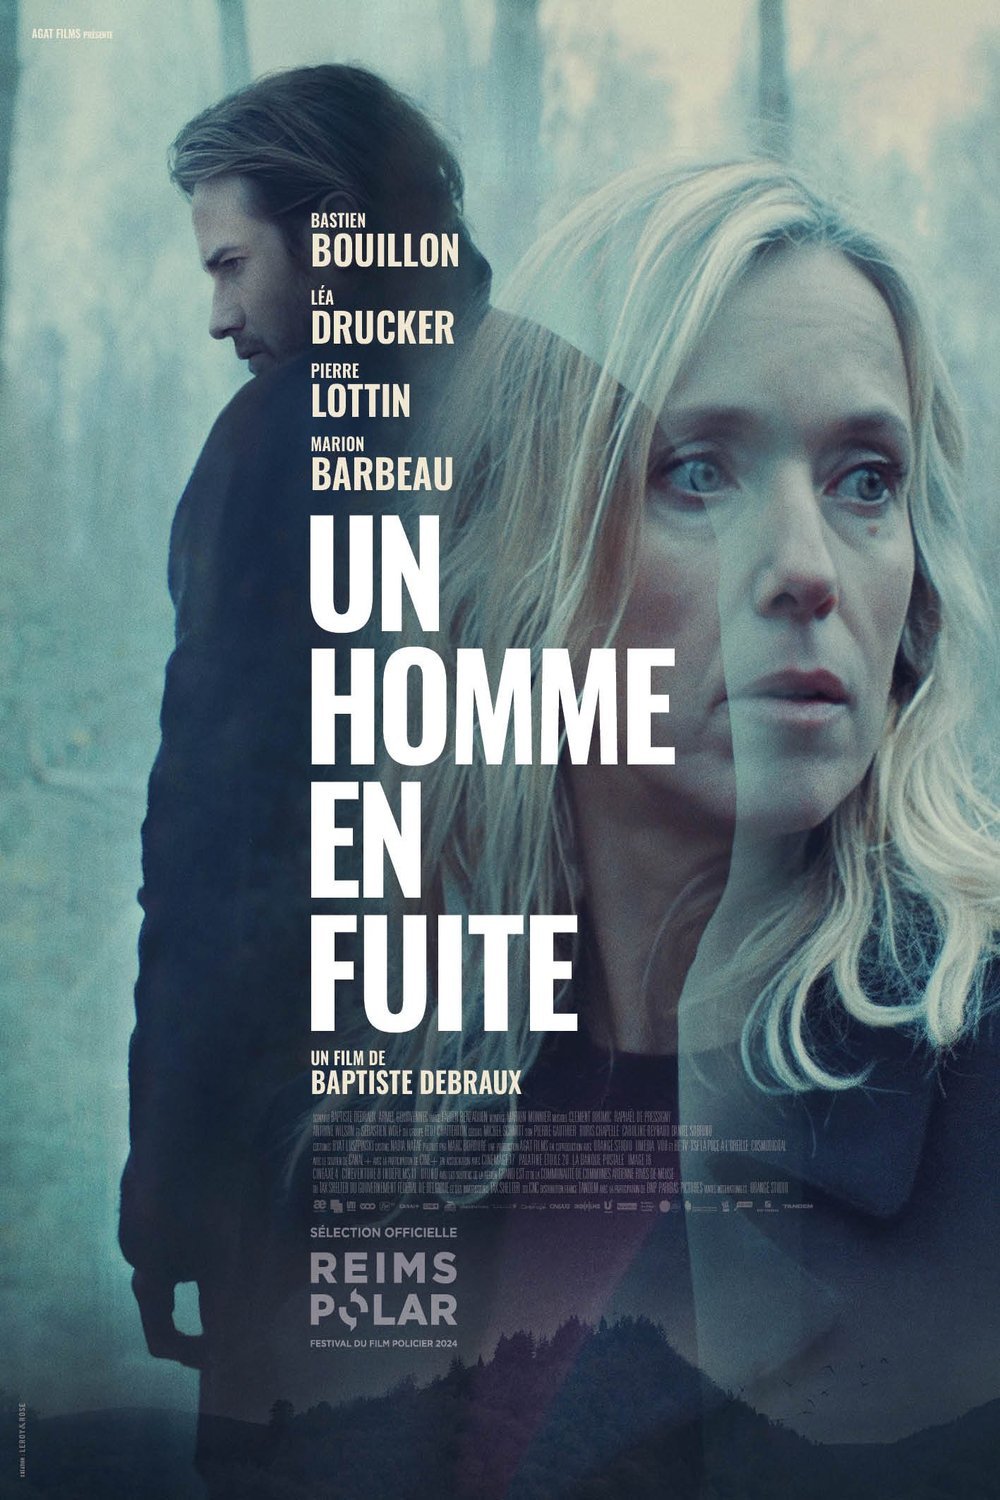 Poster of the movie Un homme en fuite